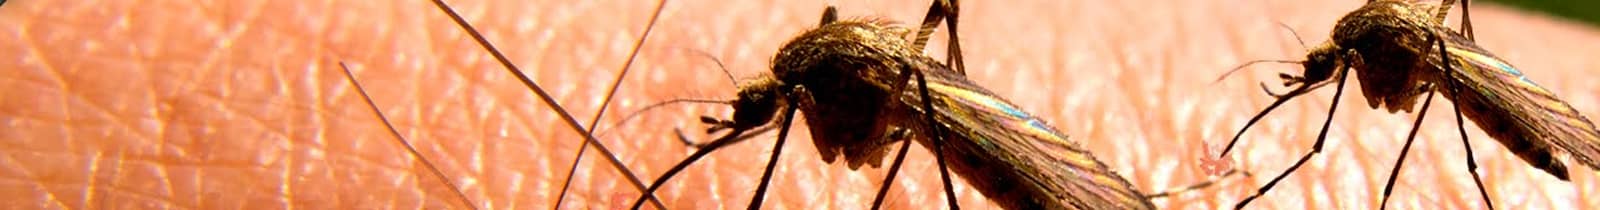 Mosquito exterminator pest control Nashville, TN